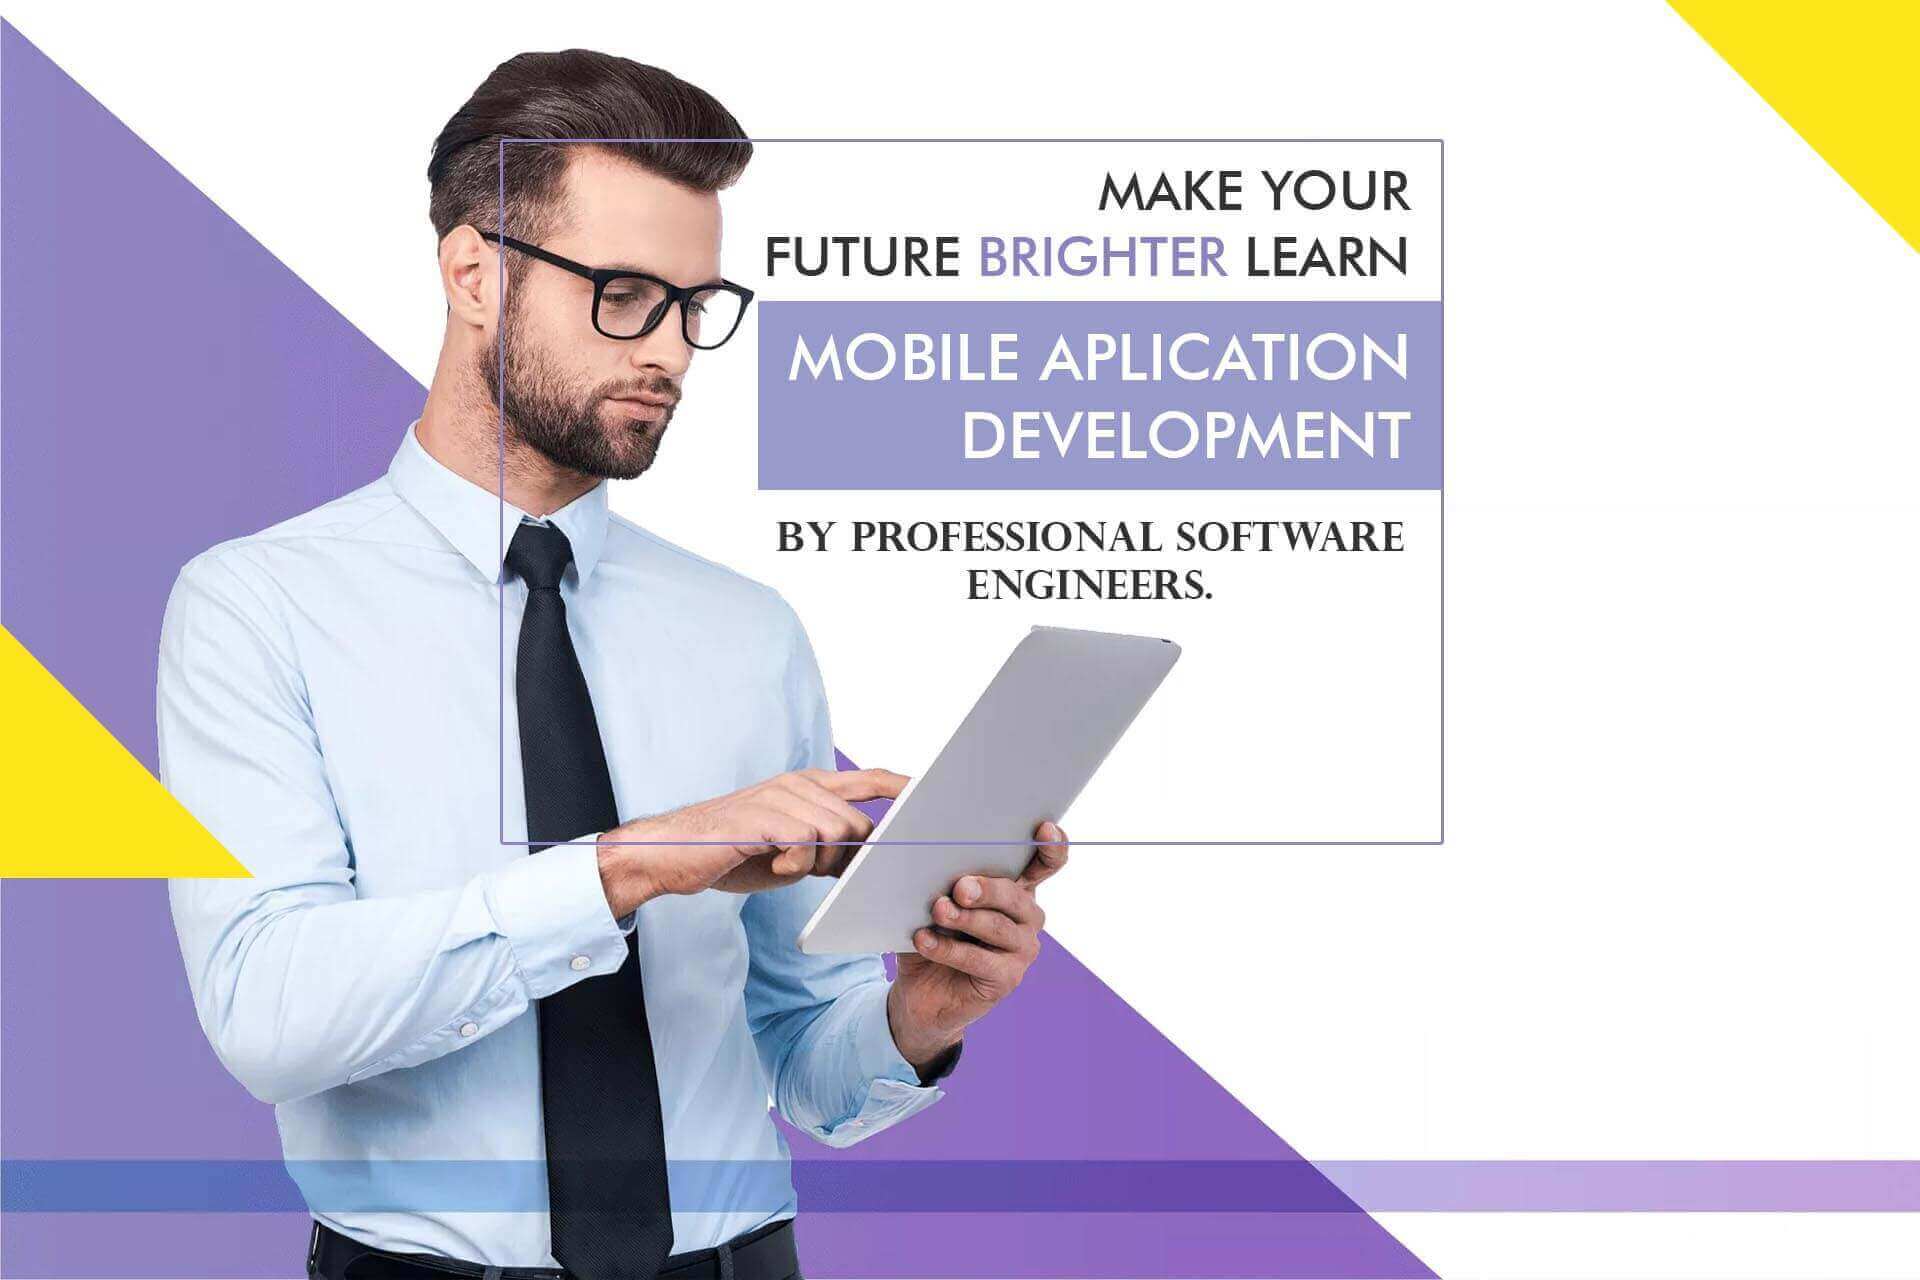 Android App Development Course In Mumbai